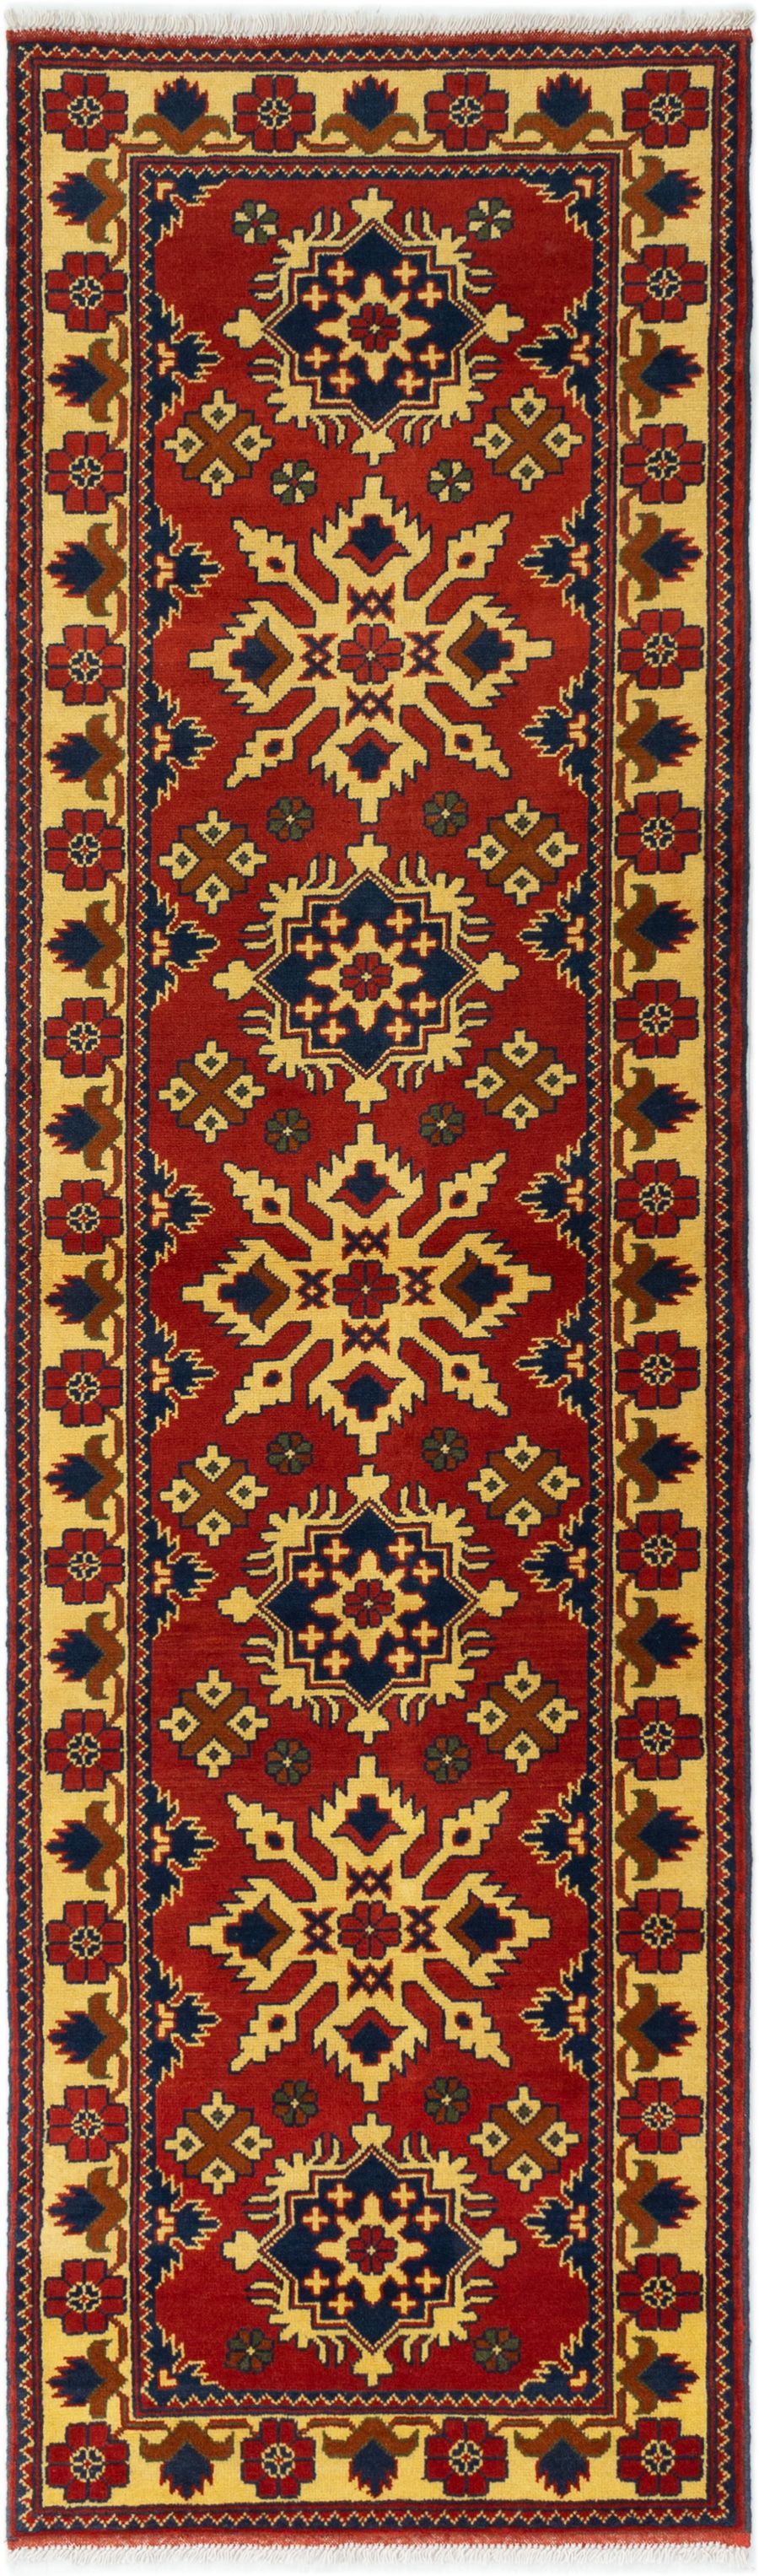 Hand-knotted Finest Kargahi Dark Copper Wool Rug 2'9" x 9'5" Size: 2'9" x 9'5"  